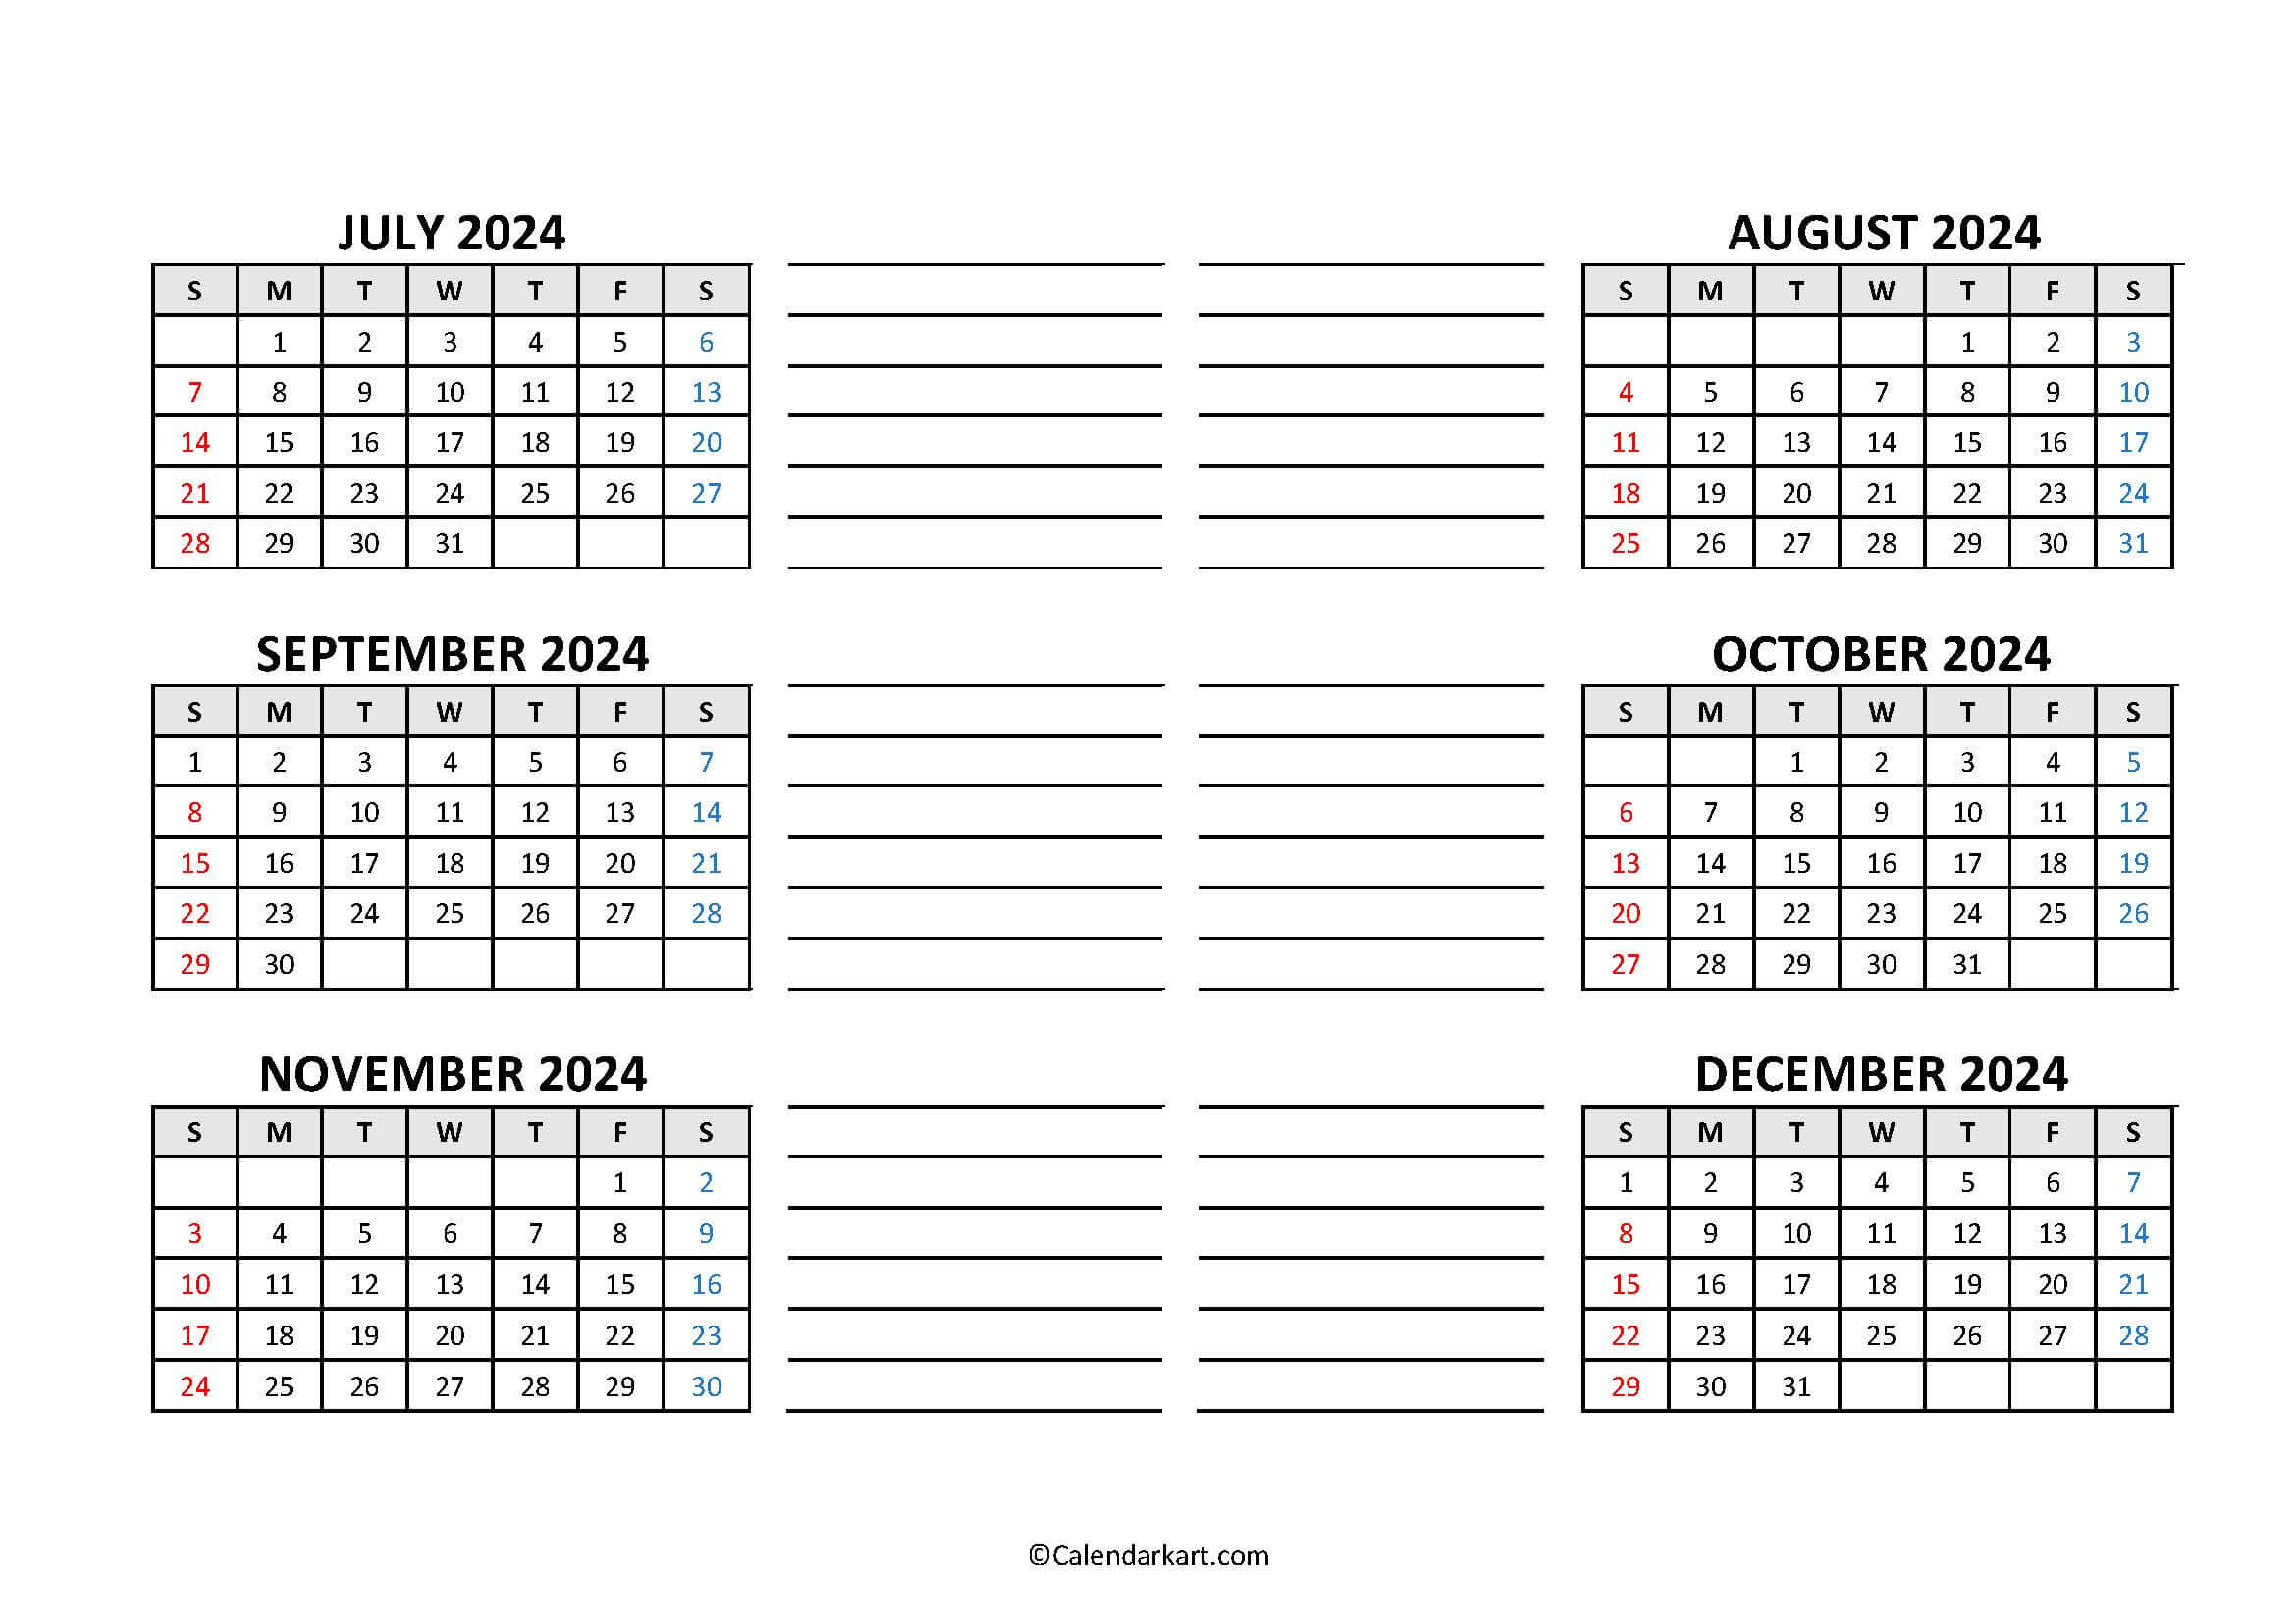 Free Printable Year At A Glance Calendar 2024 - Calendarkart | July - December 2024 Calendar